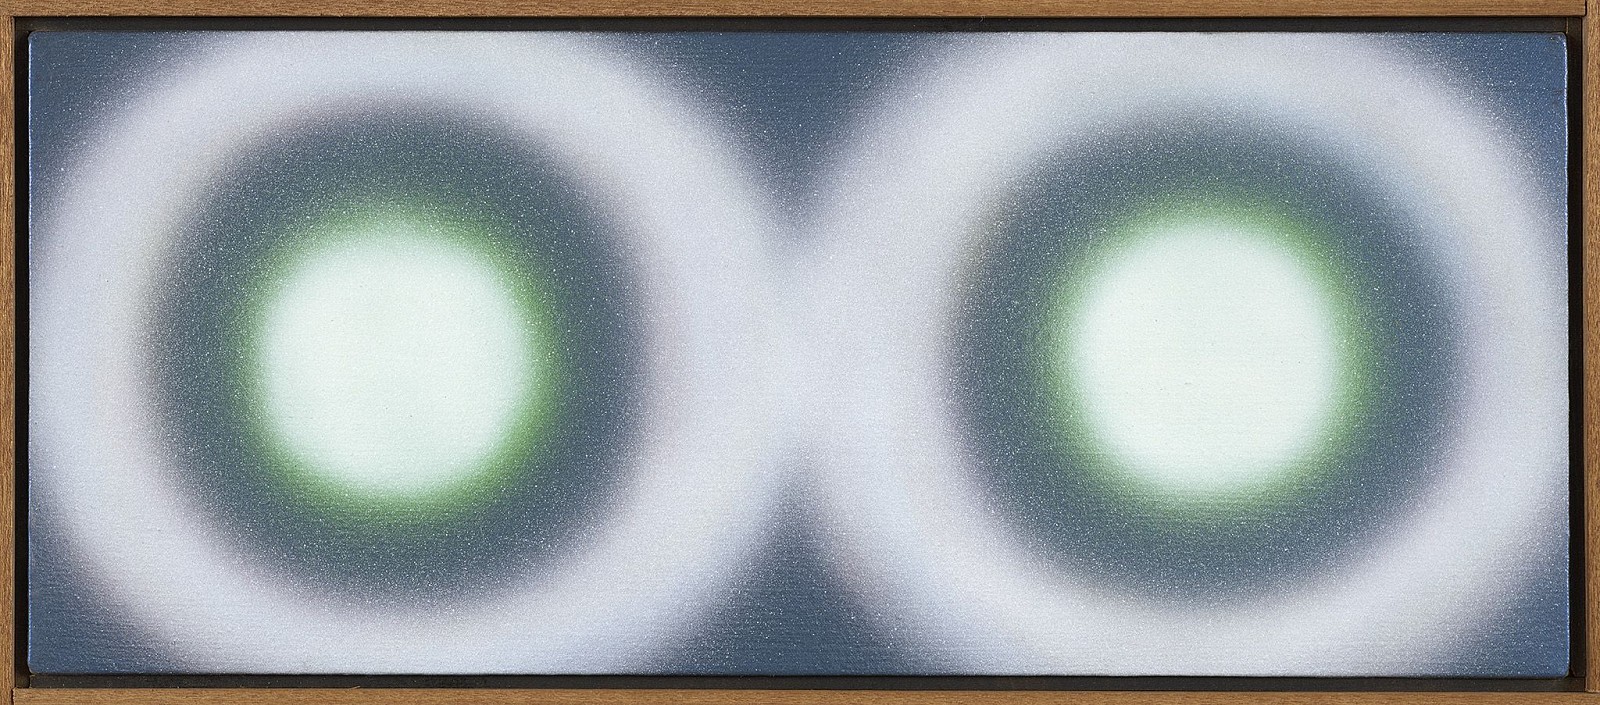 Dan Christensen, Untitled | SOLD, 1991
Acrylic on canvas, 10 x 24 in. (25.4 x 61 cm)
CHR-00243